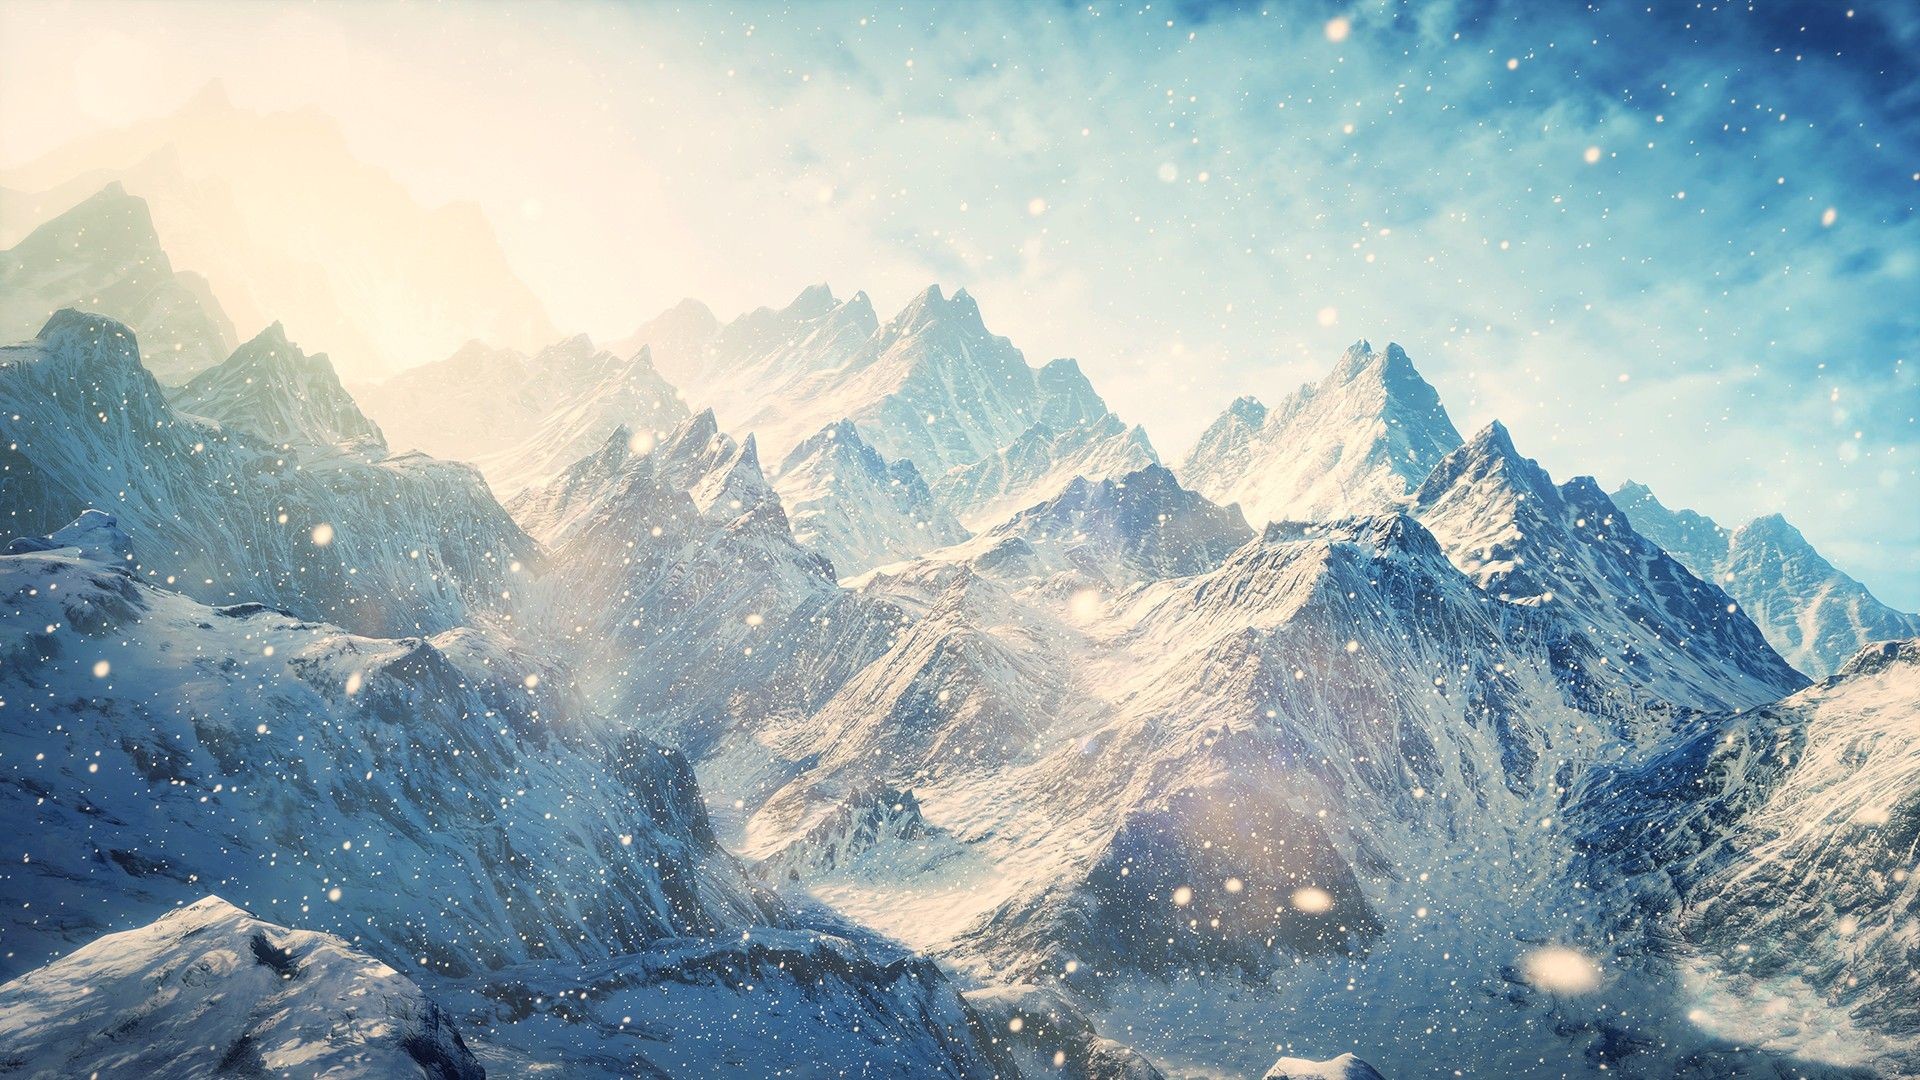 1920x1080 Winter Mountains With Snow HD Wallpaper Â» FullHDWpp - Full HD .